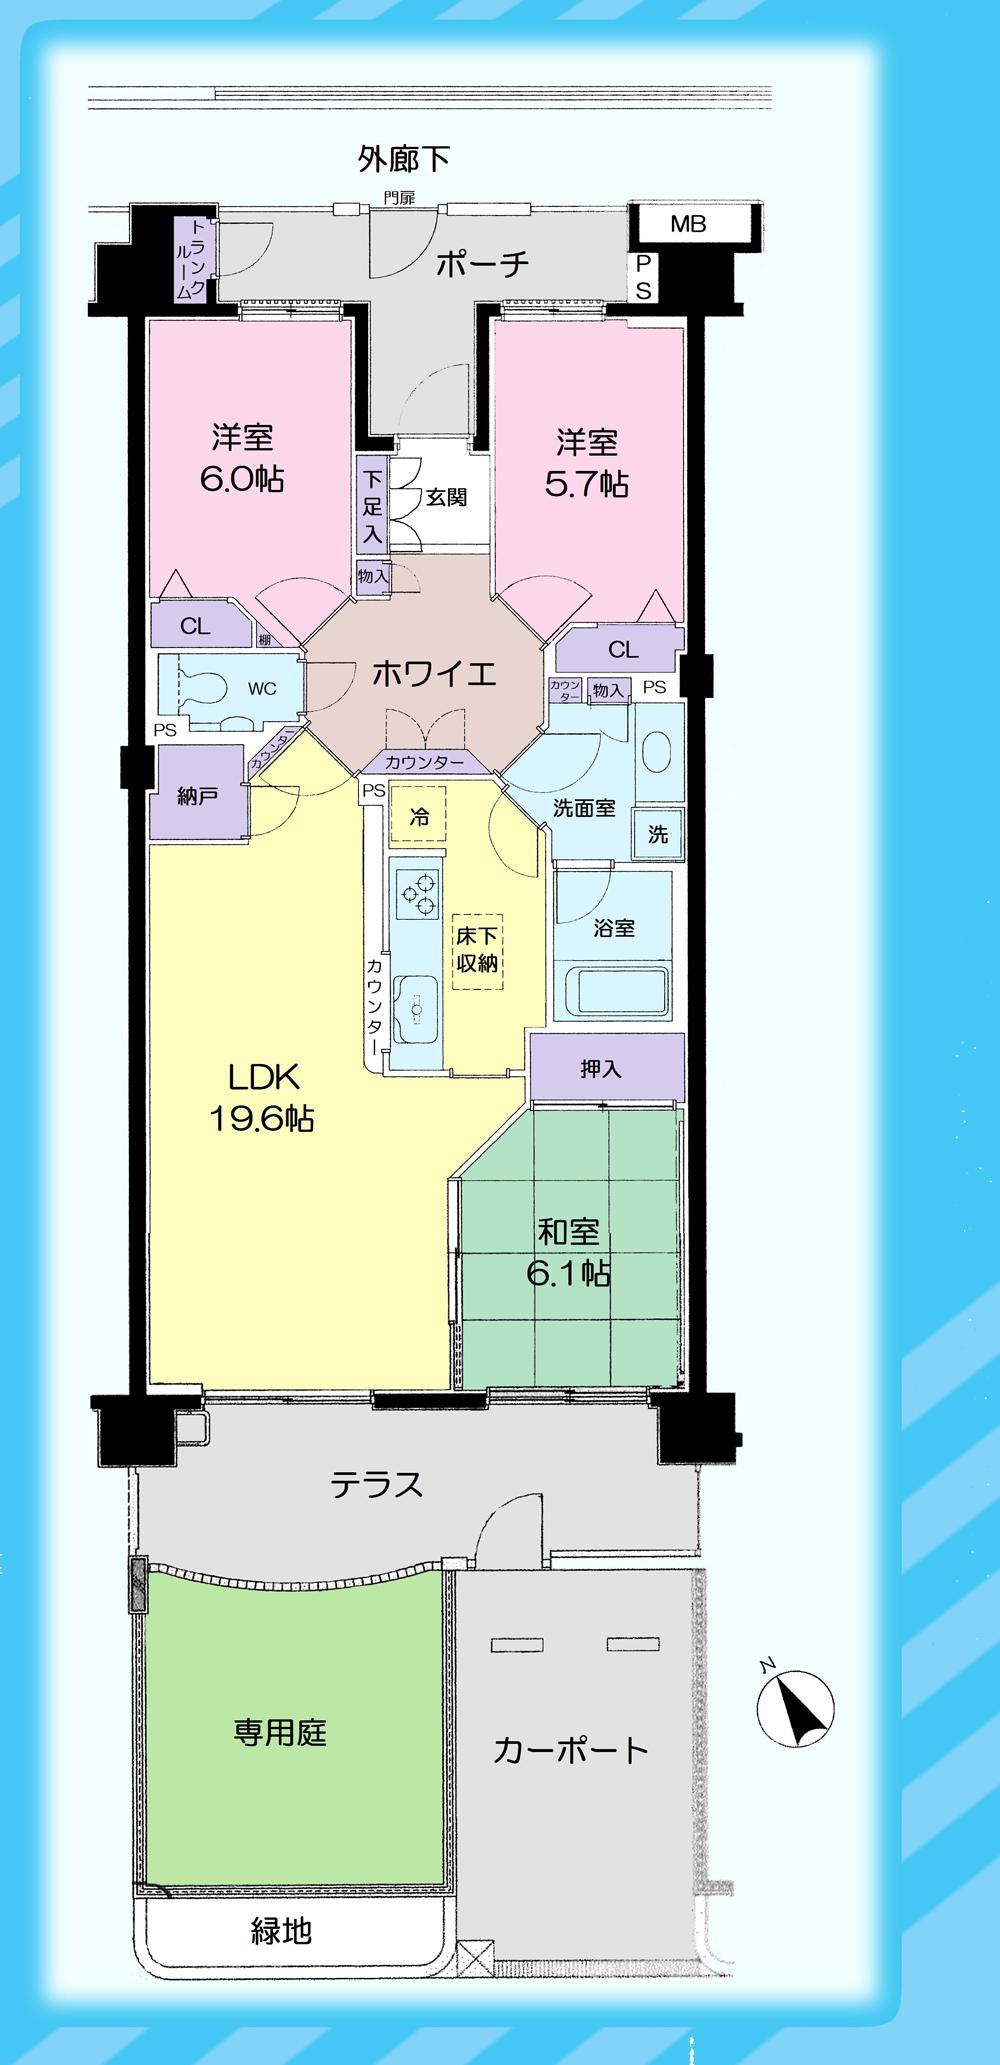 Floor plan. 3LDK, Price 36 million yen, Occupied area 86.53 sq m